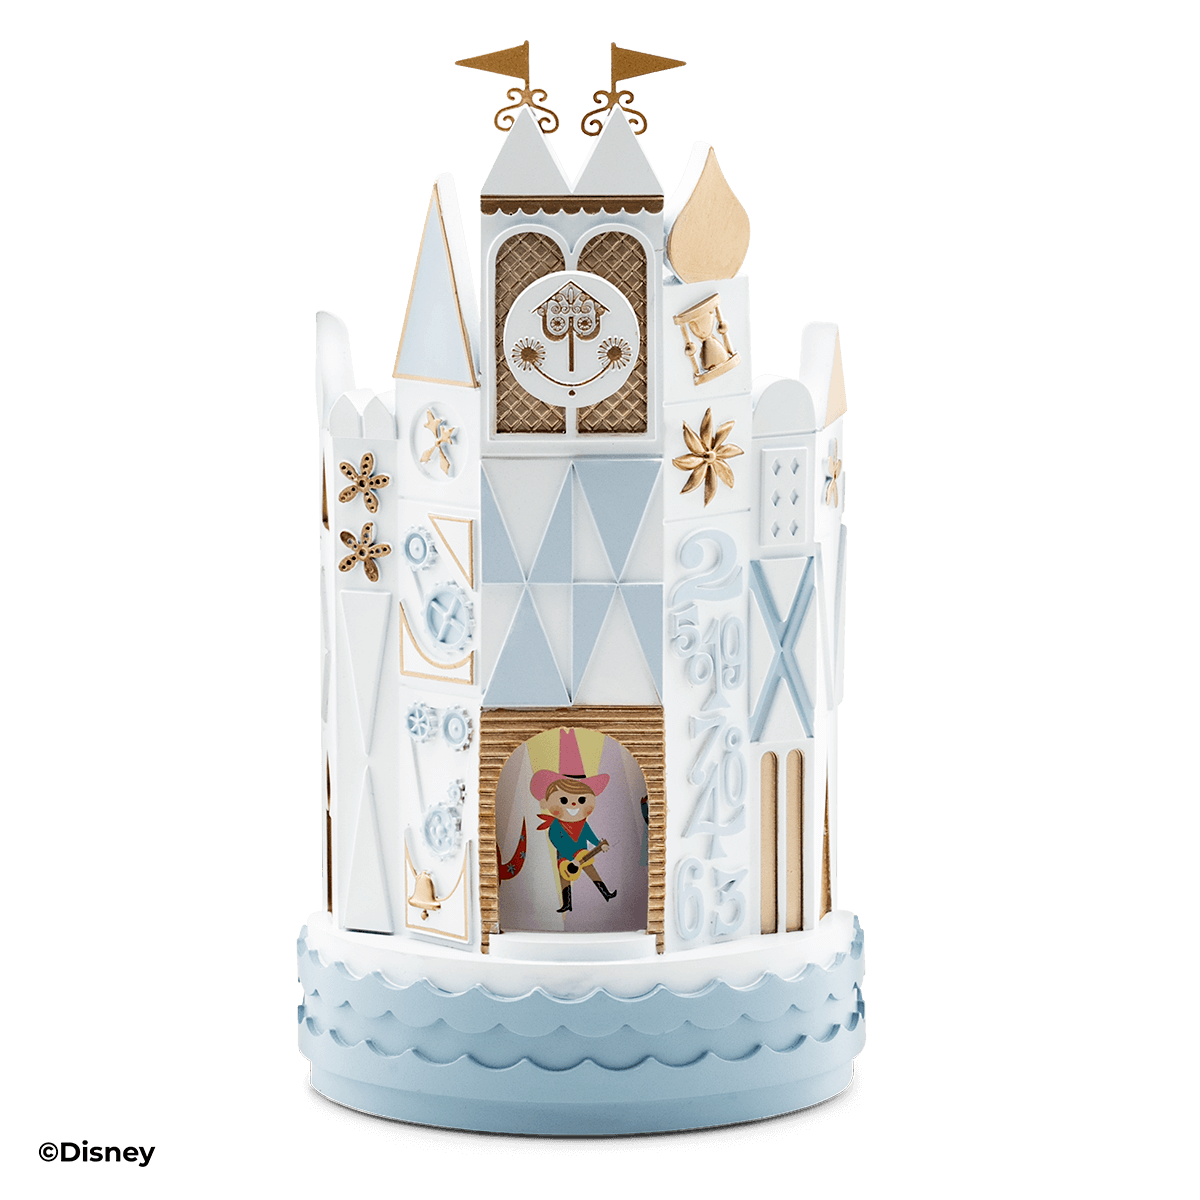 Disney Home Decor - It's a Small World Clock Tower - Walt Disney